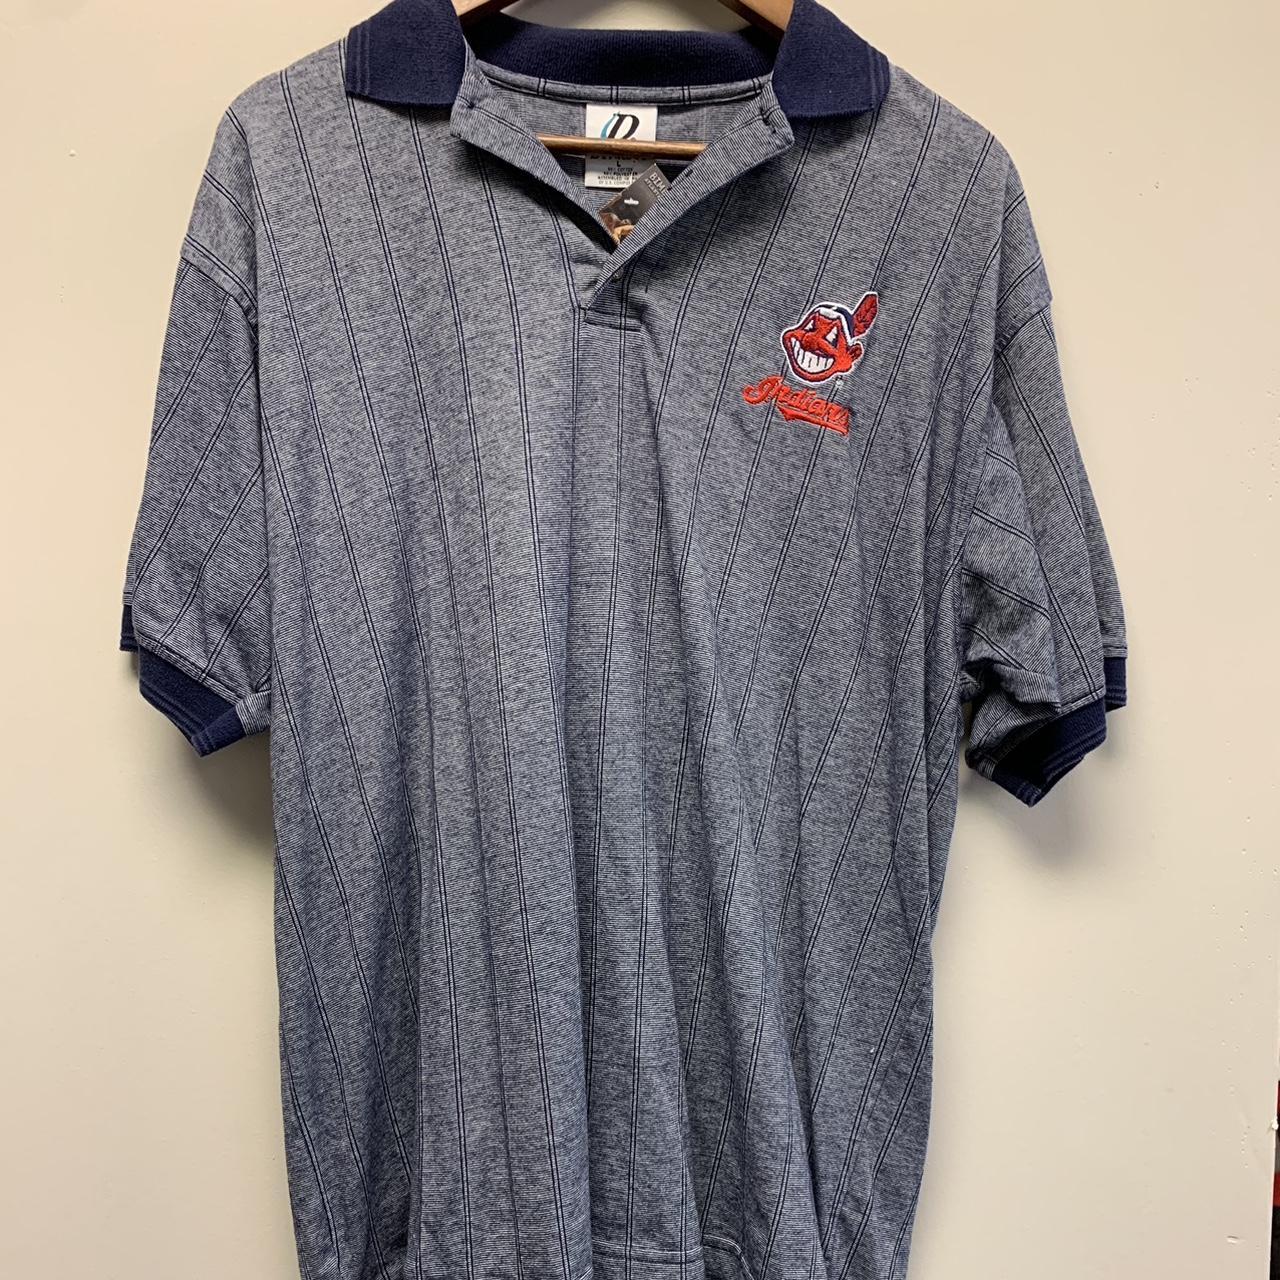 Dynasty, Shirts, Cleveland Indians Polo Shirt